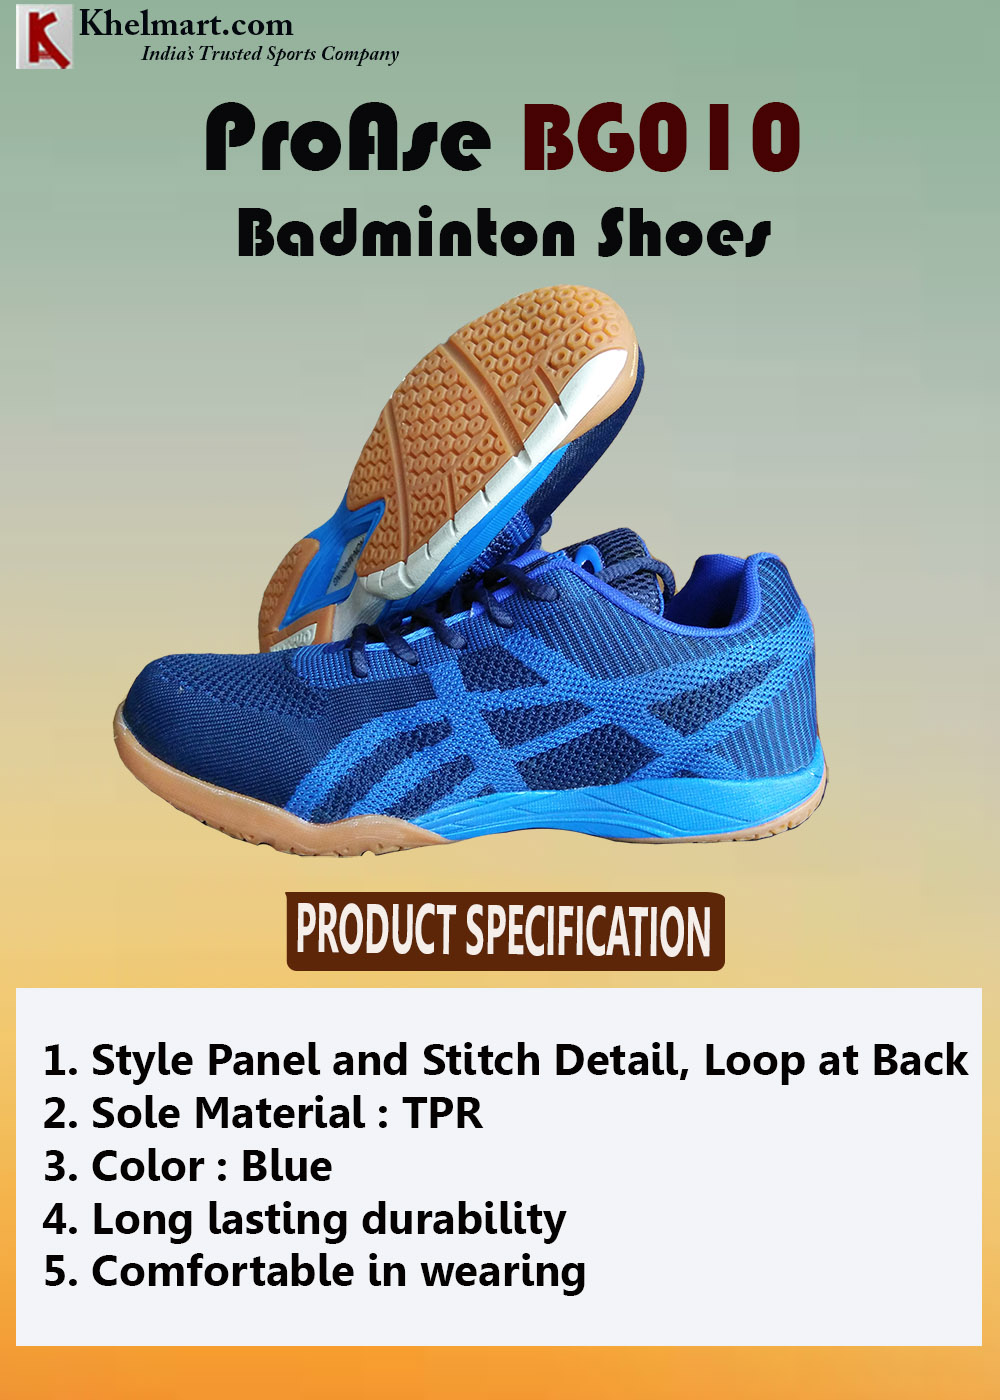 Most Expensive Badminton Shoes 2018 